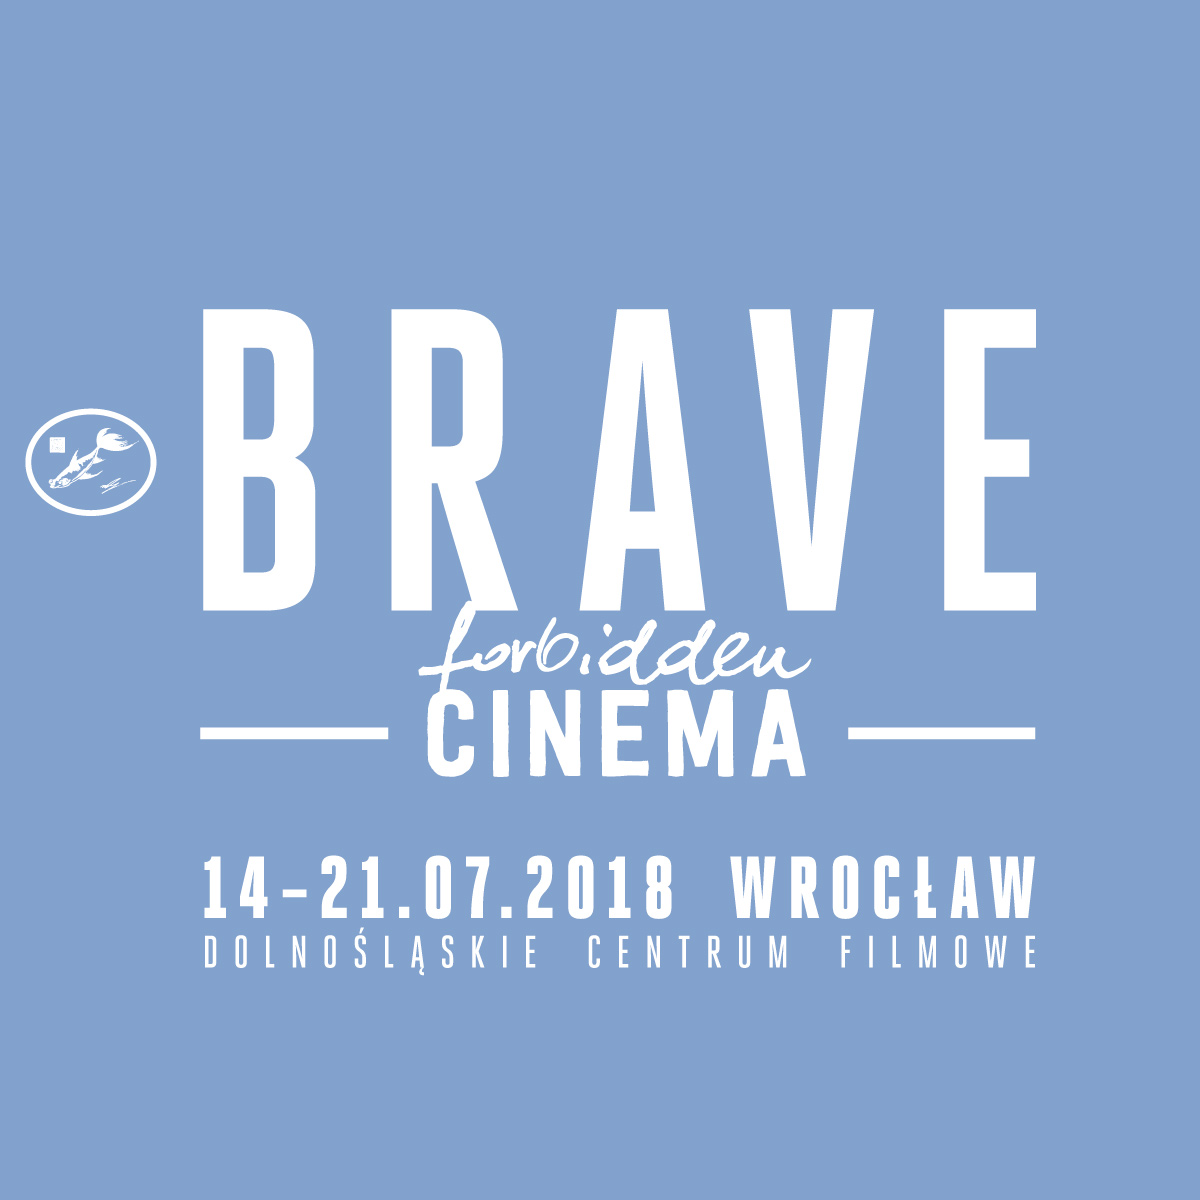 Brave Forbidden Cinema logo 2018